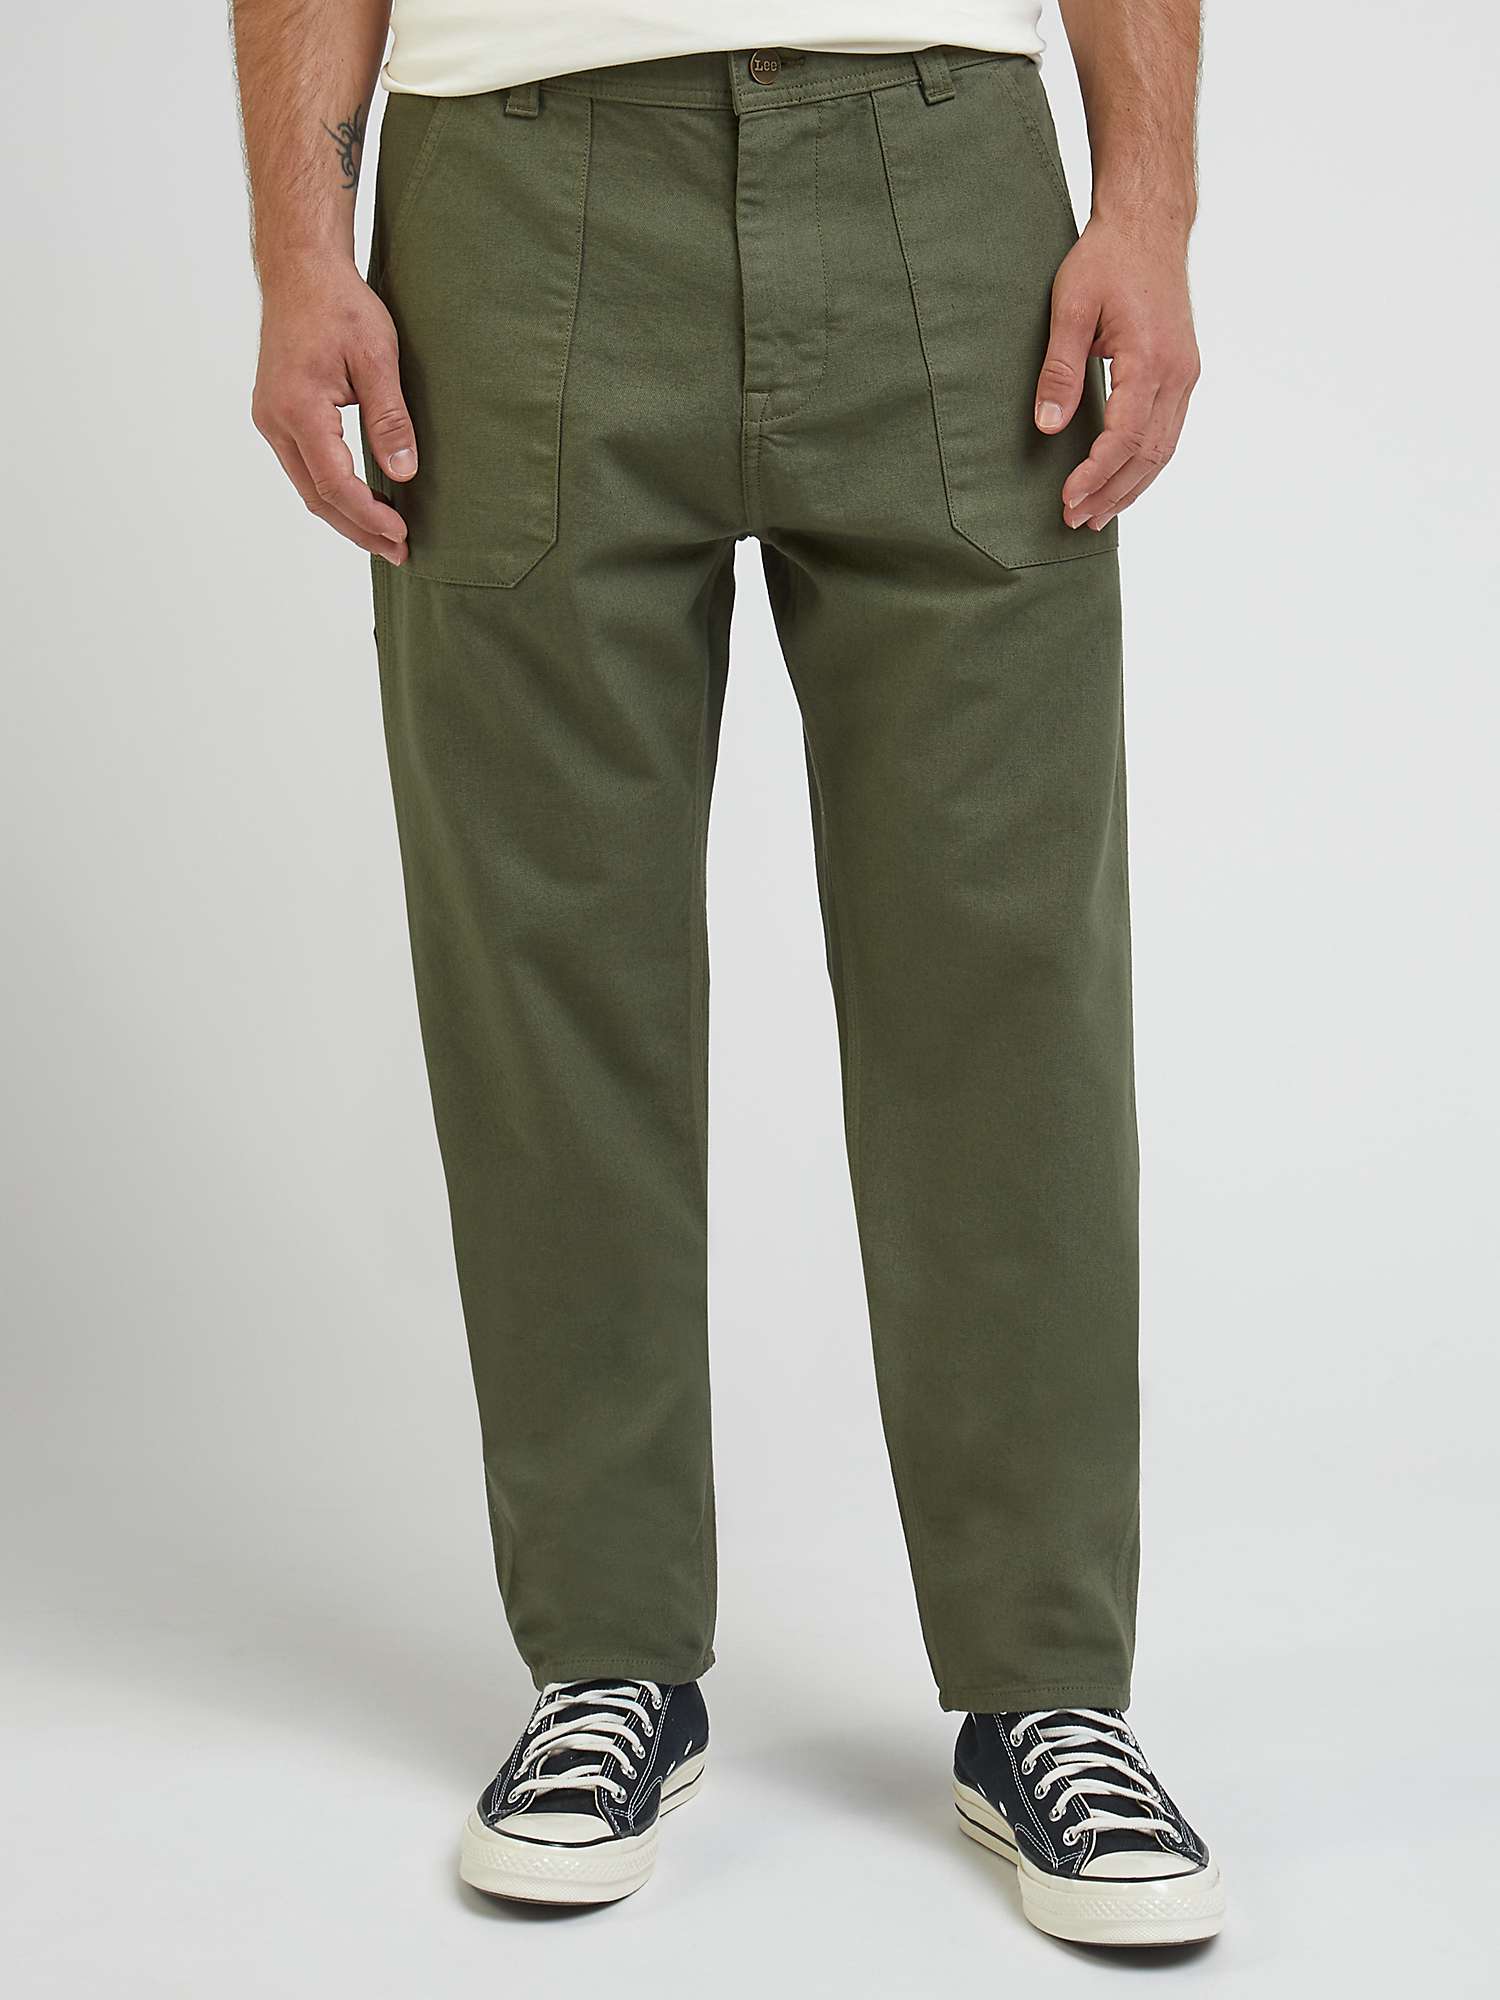 Buy Lee Cotton Blend Fatigue Pants Online at johnlewis.com